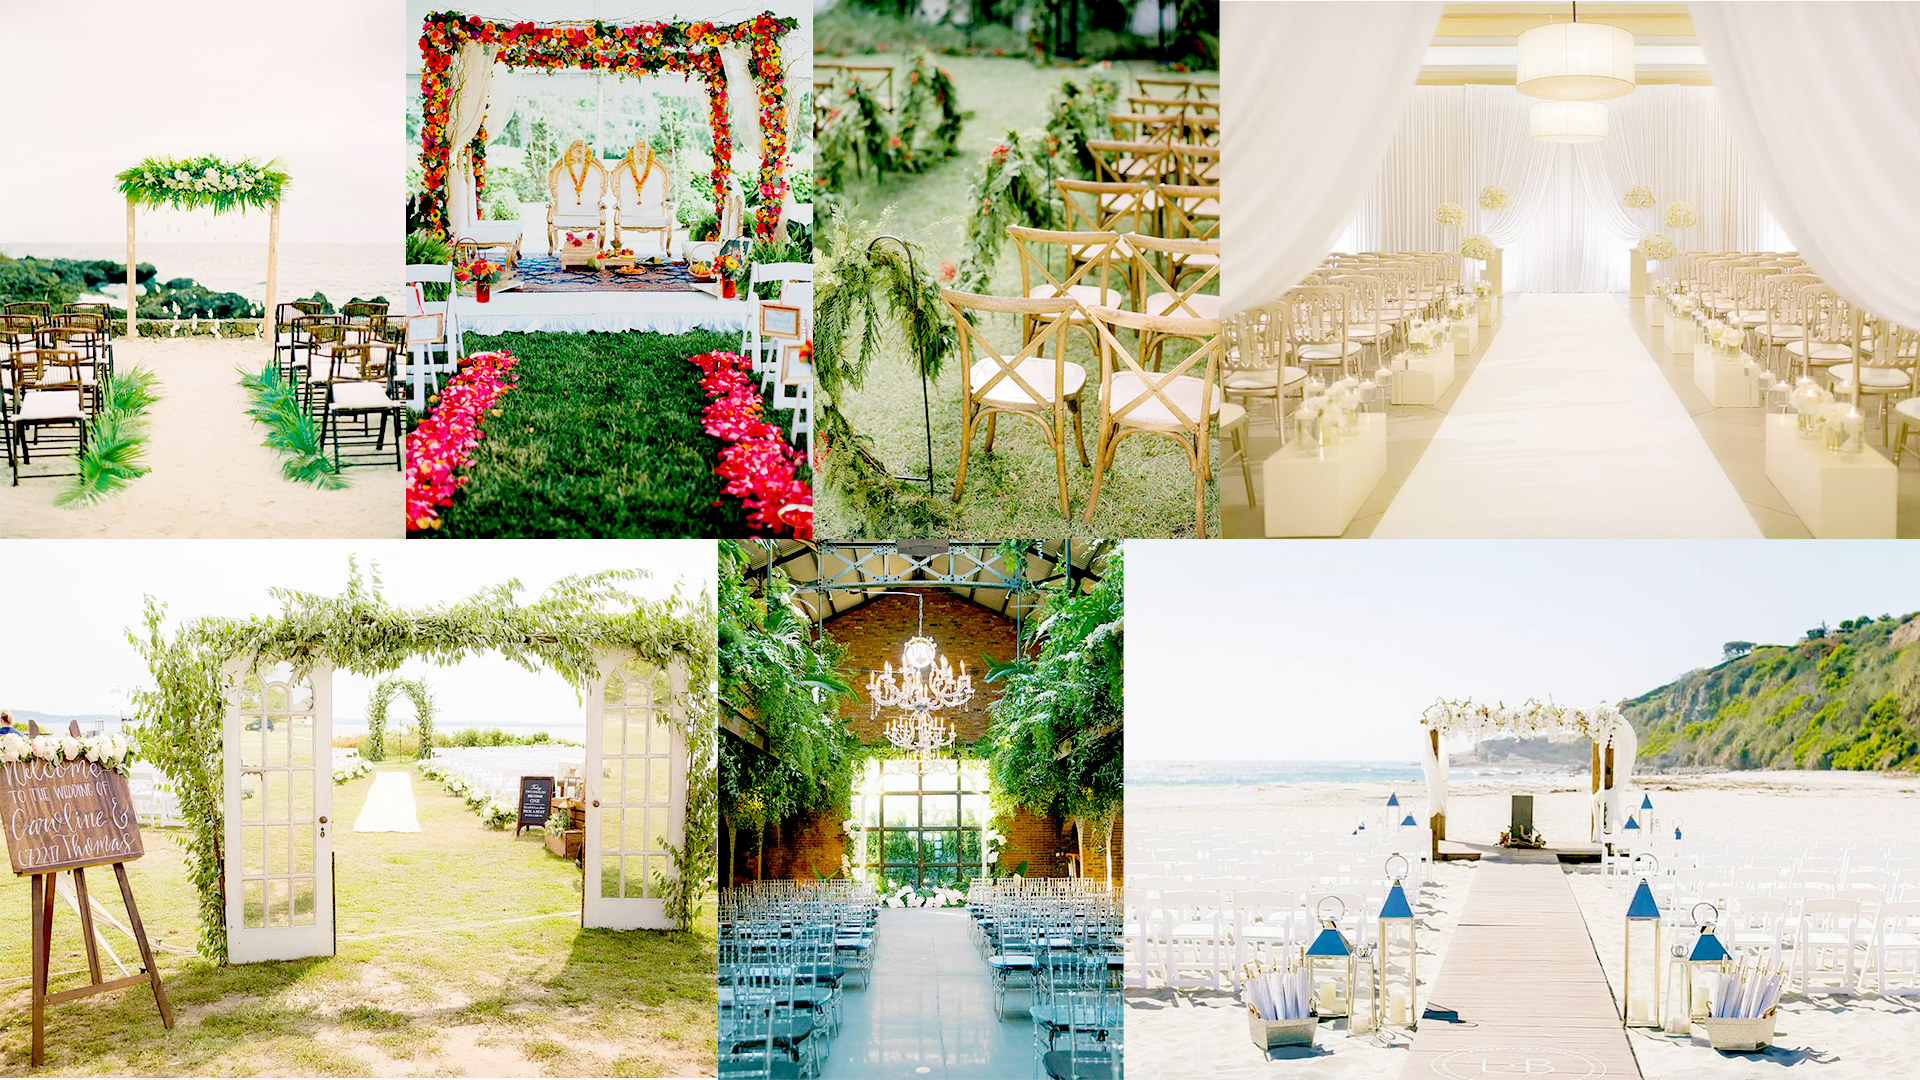 21 Romantic Wedding Aisle Decorations Ideas To Completely Transform Your Wedding Venue